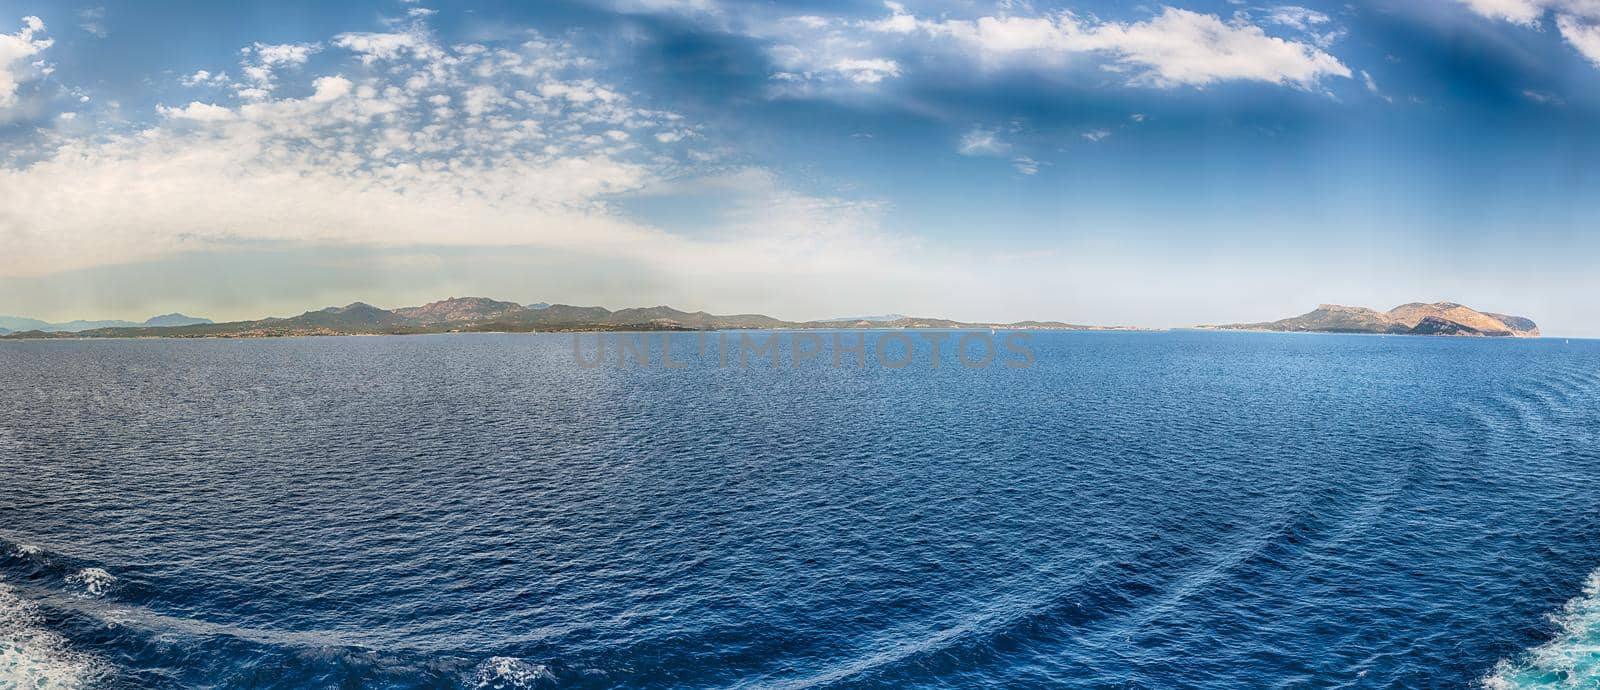 Panoramic view over Olbia, Sardinia, Italy by marcorubino